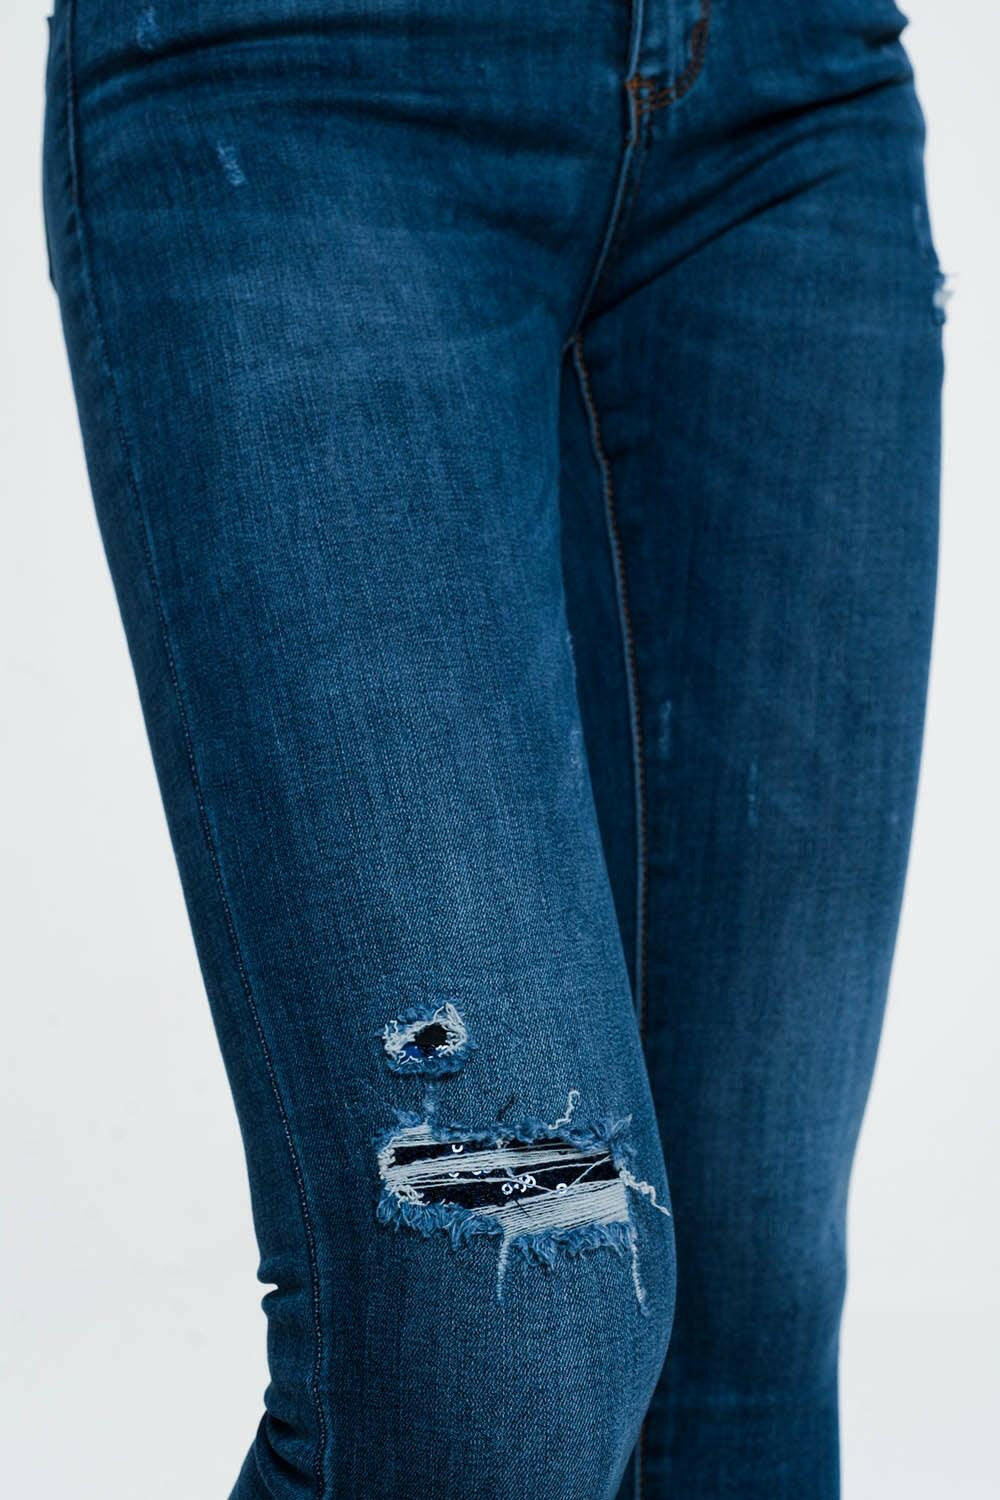 Ripped Skinny Jeans in Blue Denim - GENUINE AUTHENTIC BRAND LLC